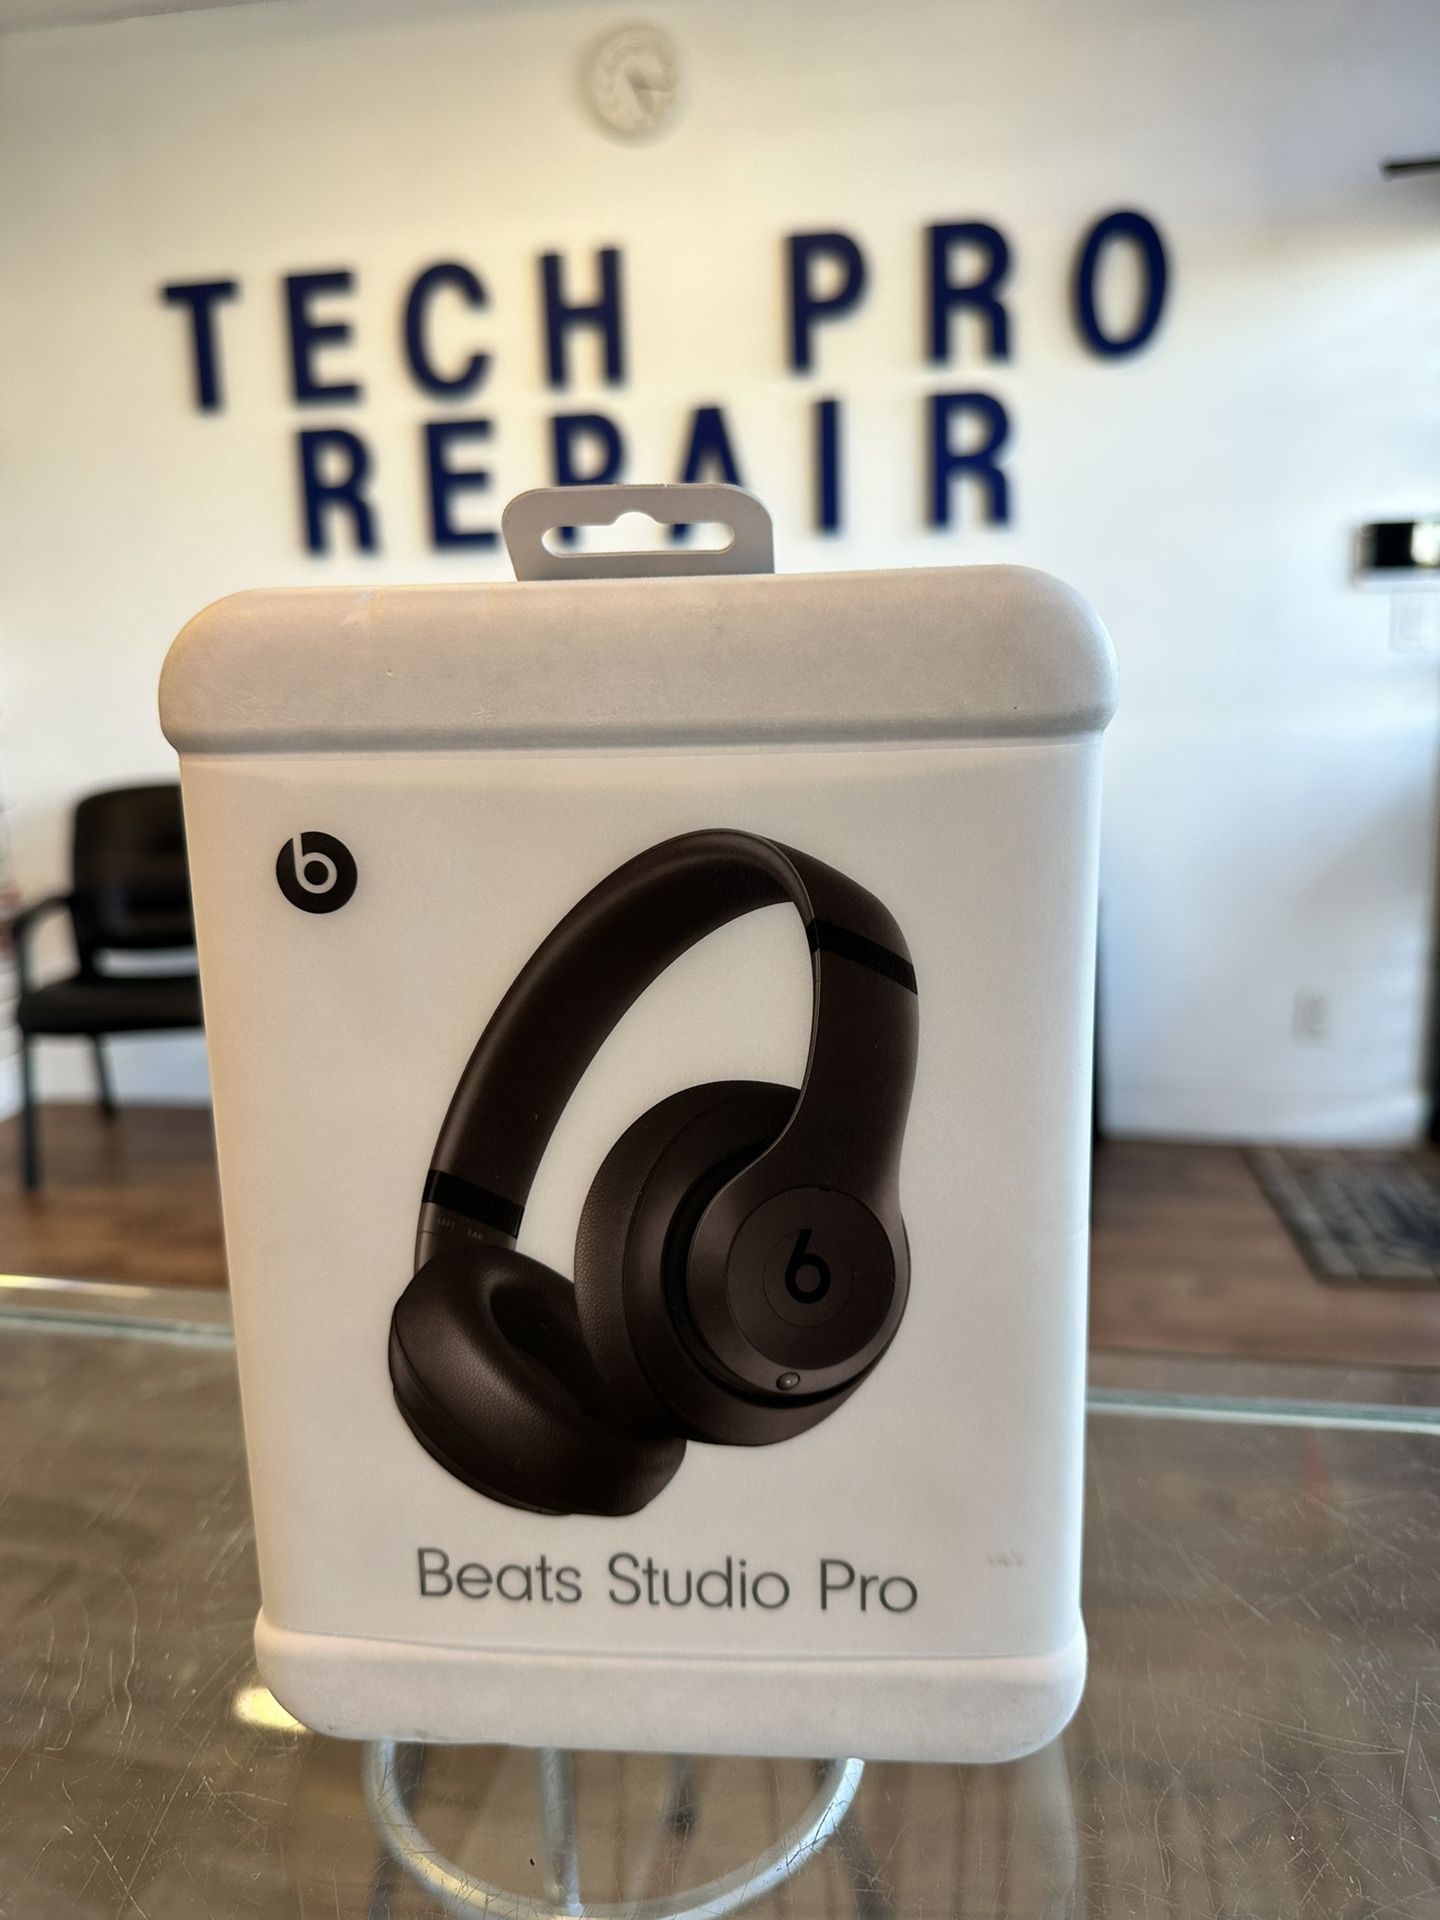 Brand New, Sealed! Beats Studio Pro Headphones Black. Wireless over ear